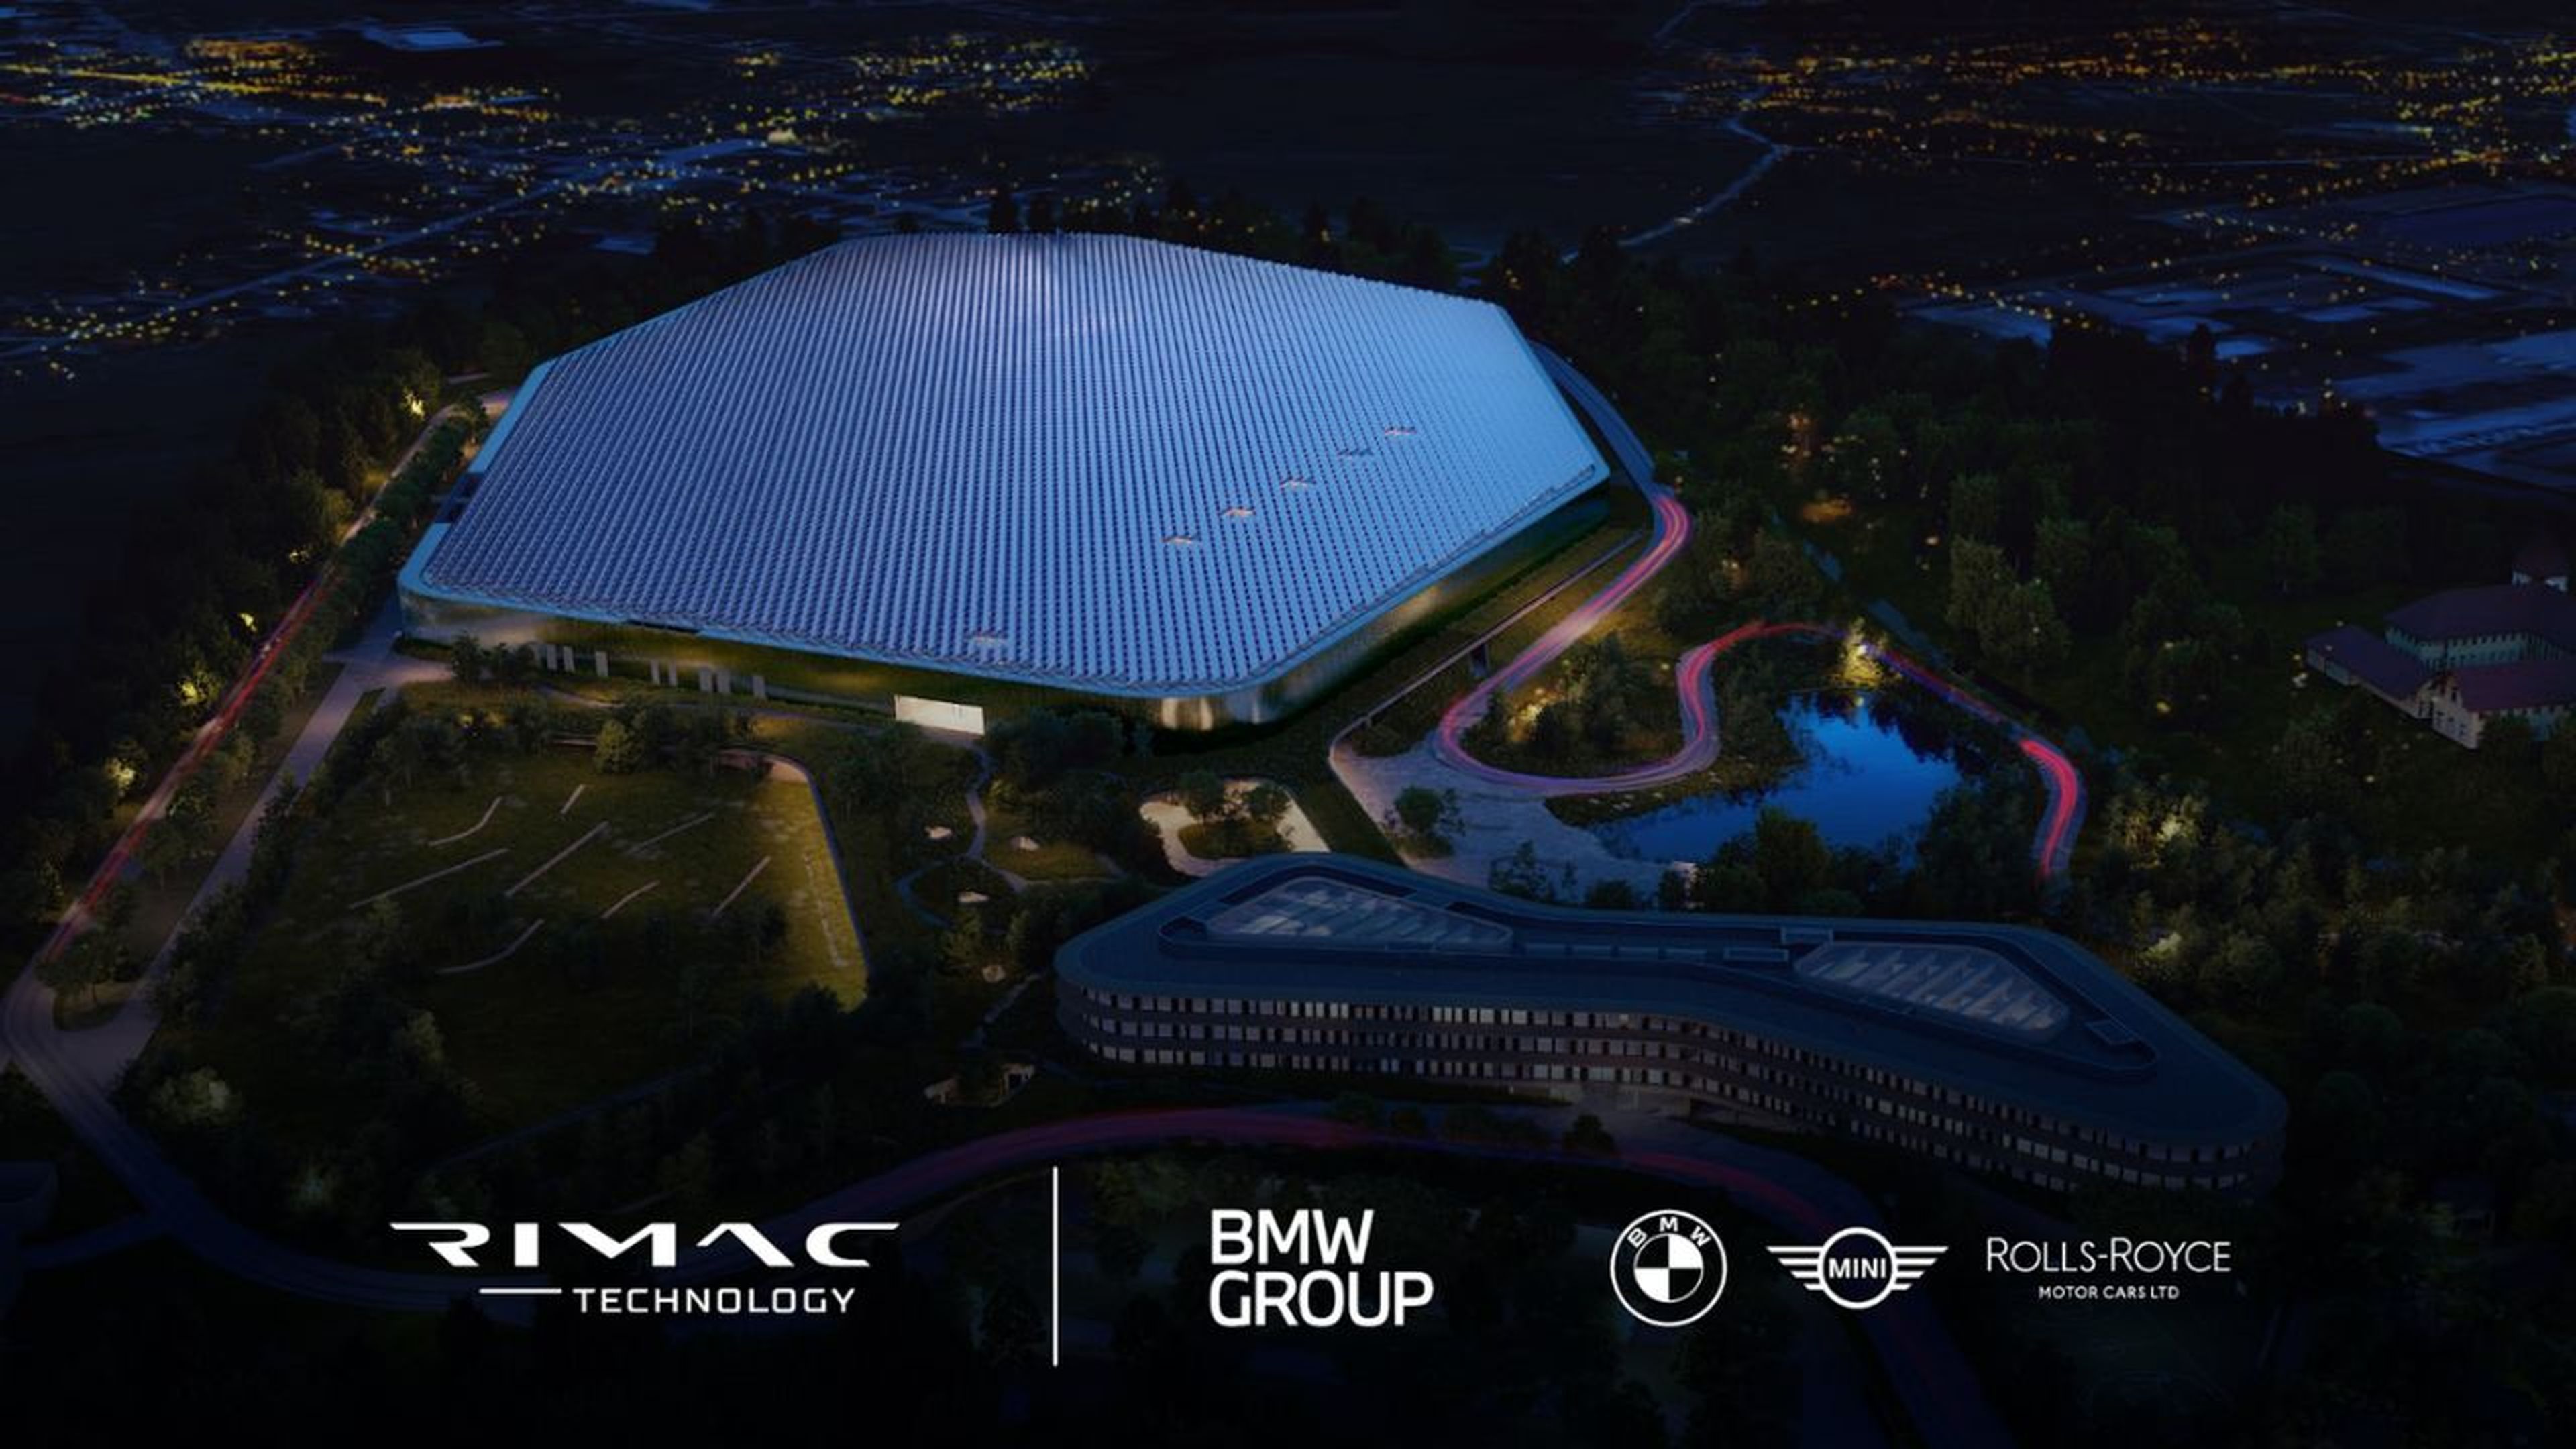 Asociación BMW-Rimac coche eléctrico